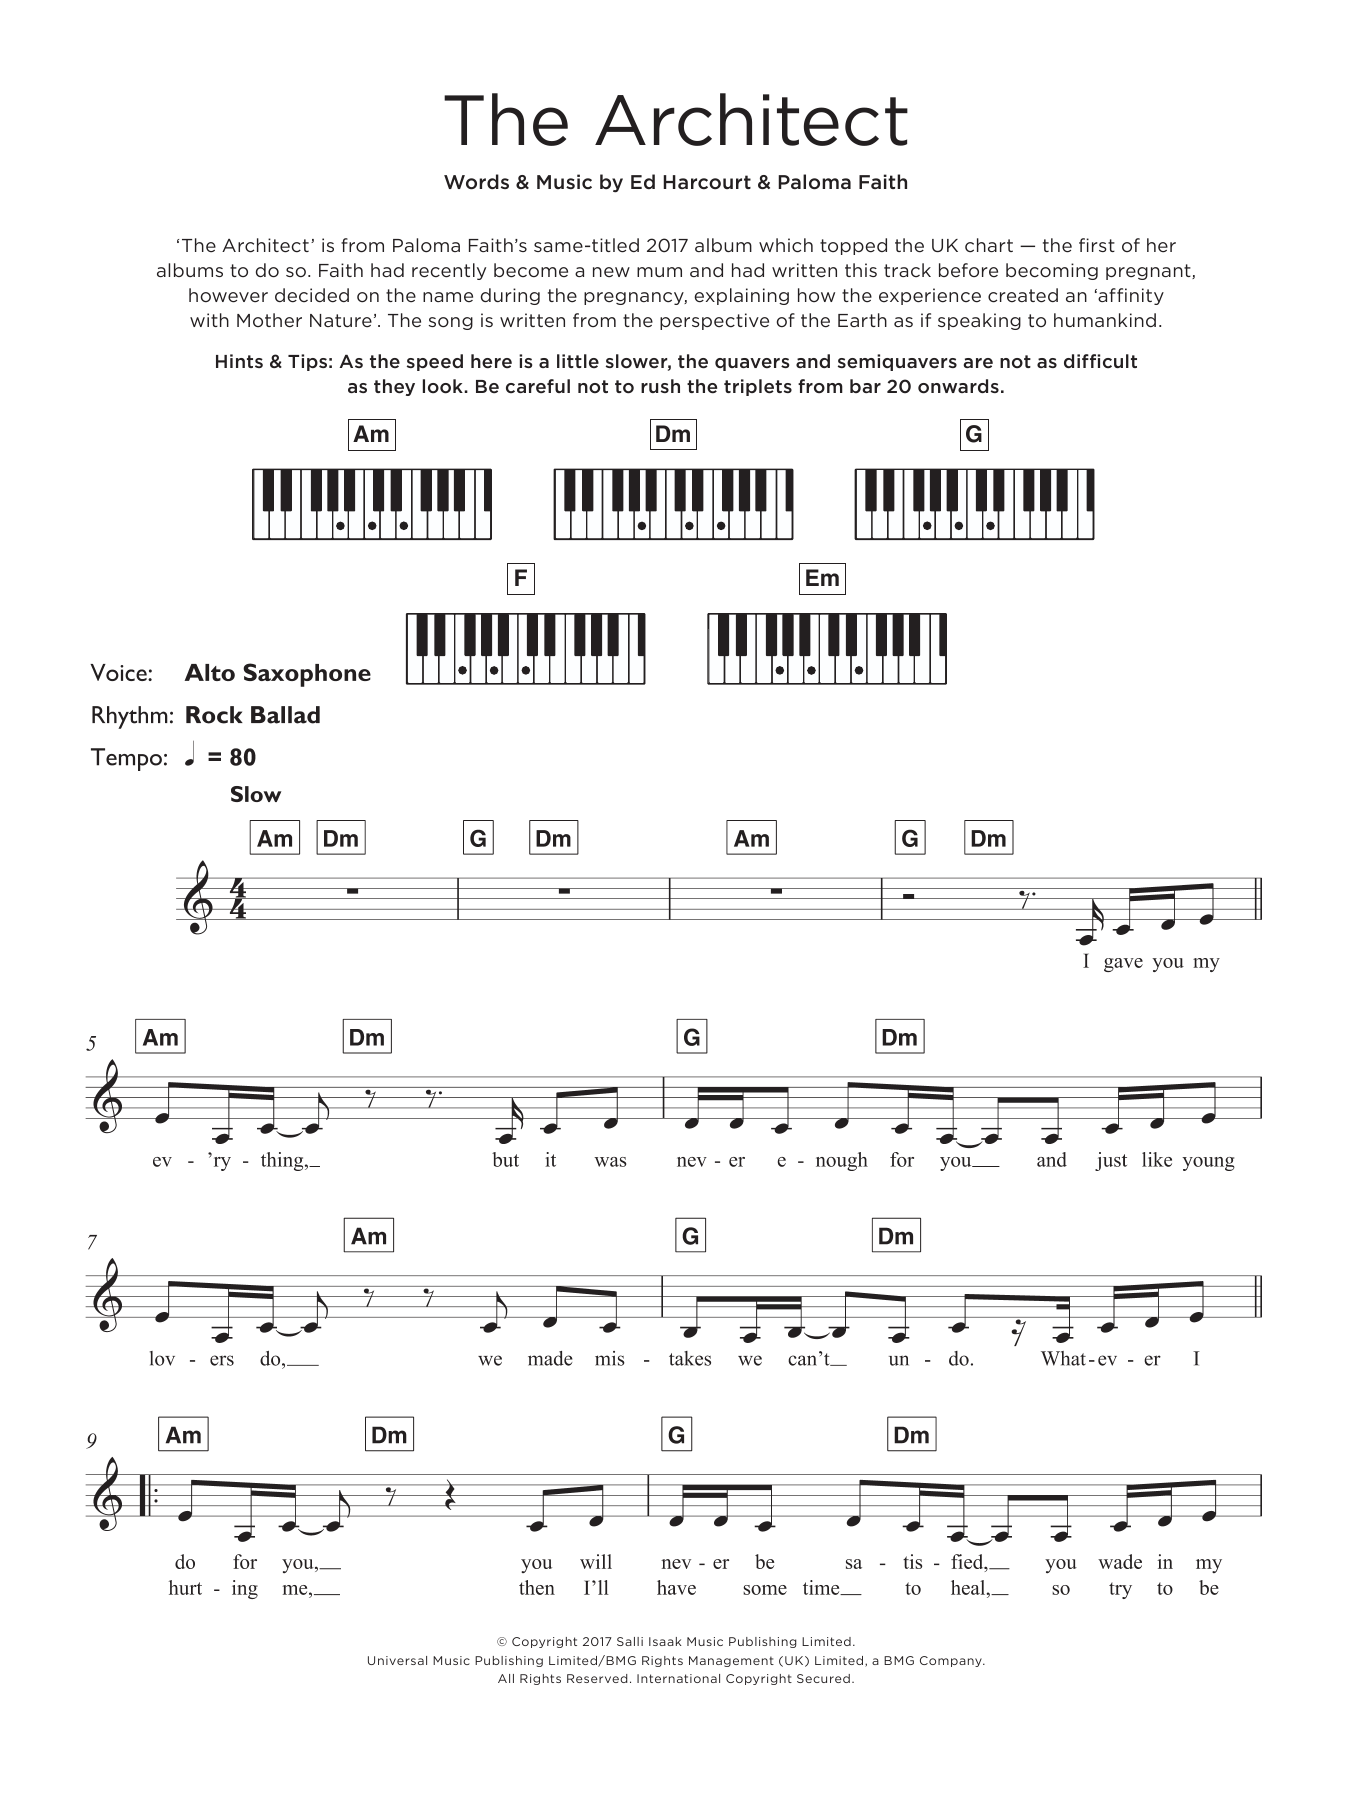 Paloma Faith The Architect Sheet Music Notes & Chords for Beginner Ukulele - Download or Print PDF